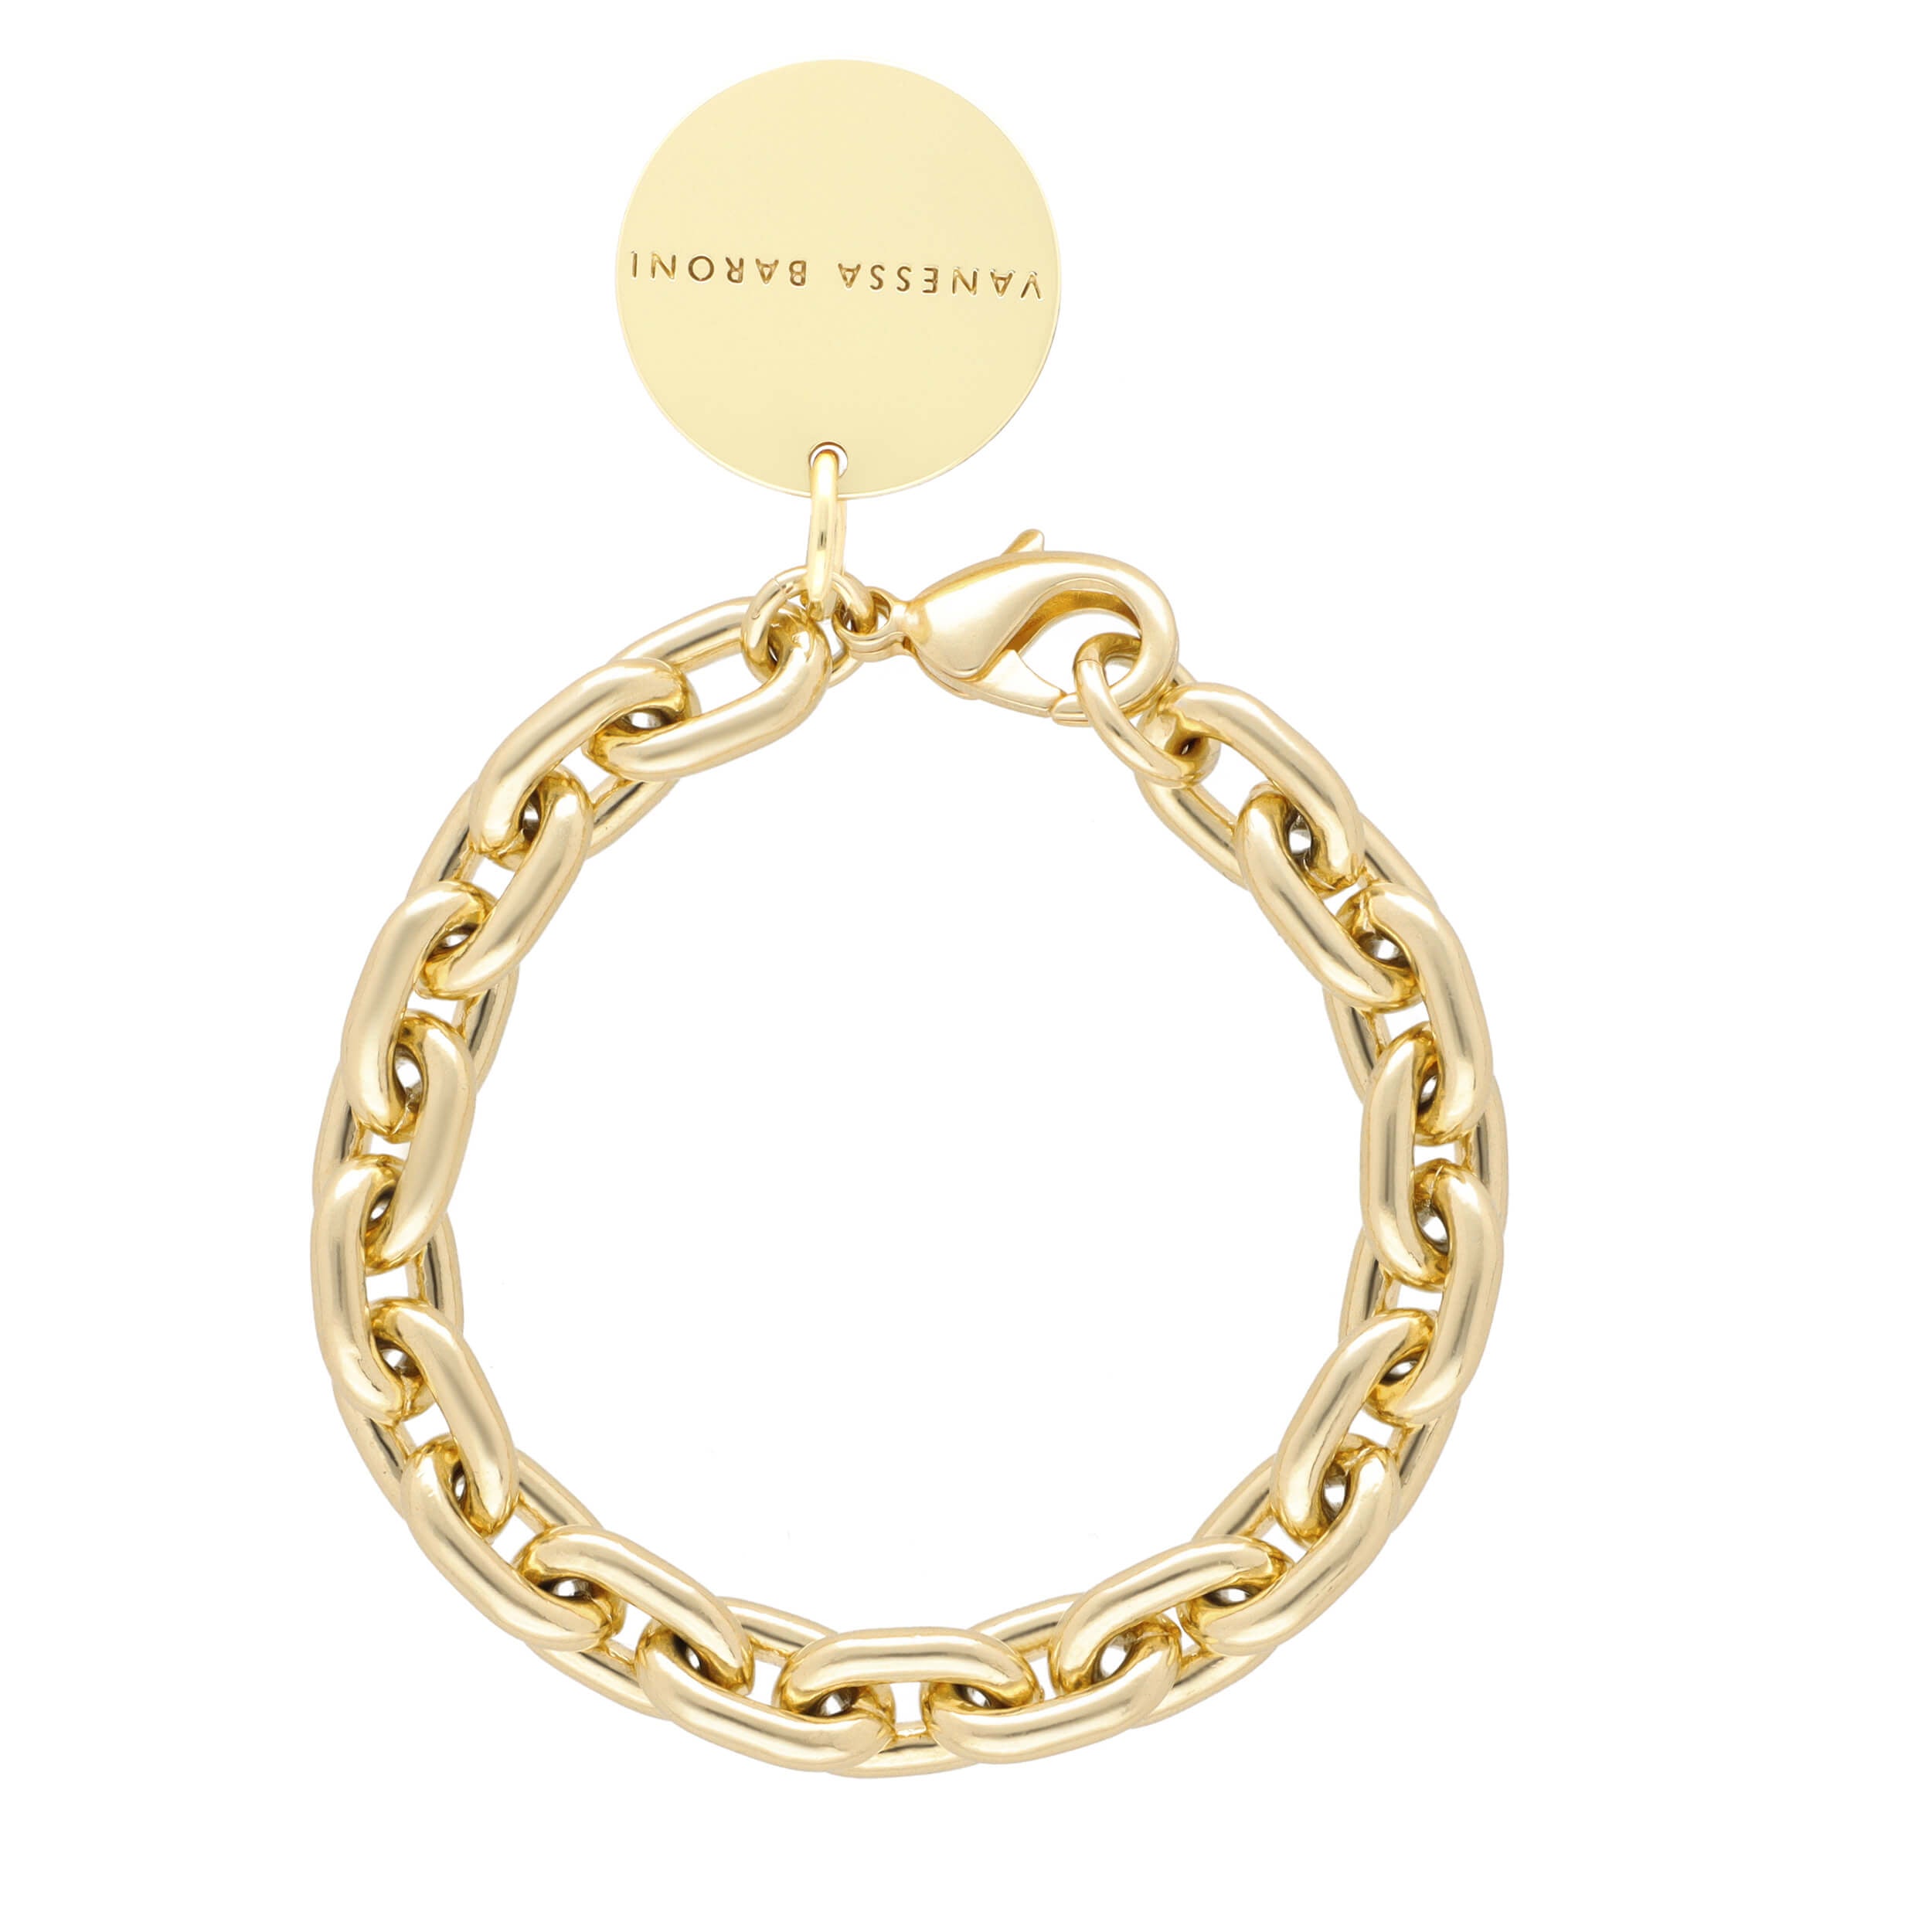 GIANT Bracelet Gold Vintage - Vanessa Baroni